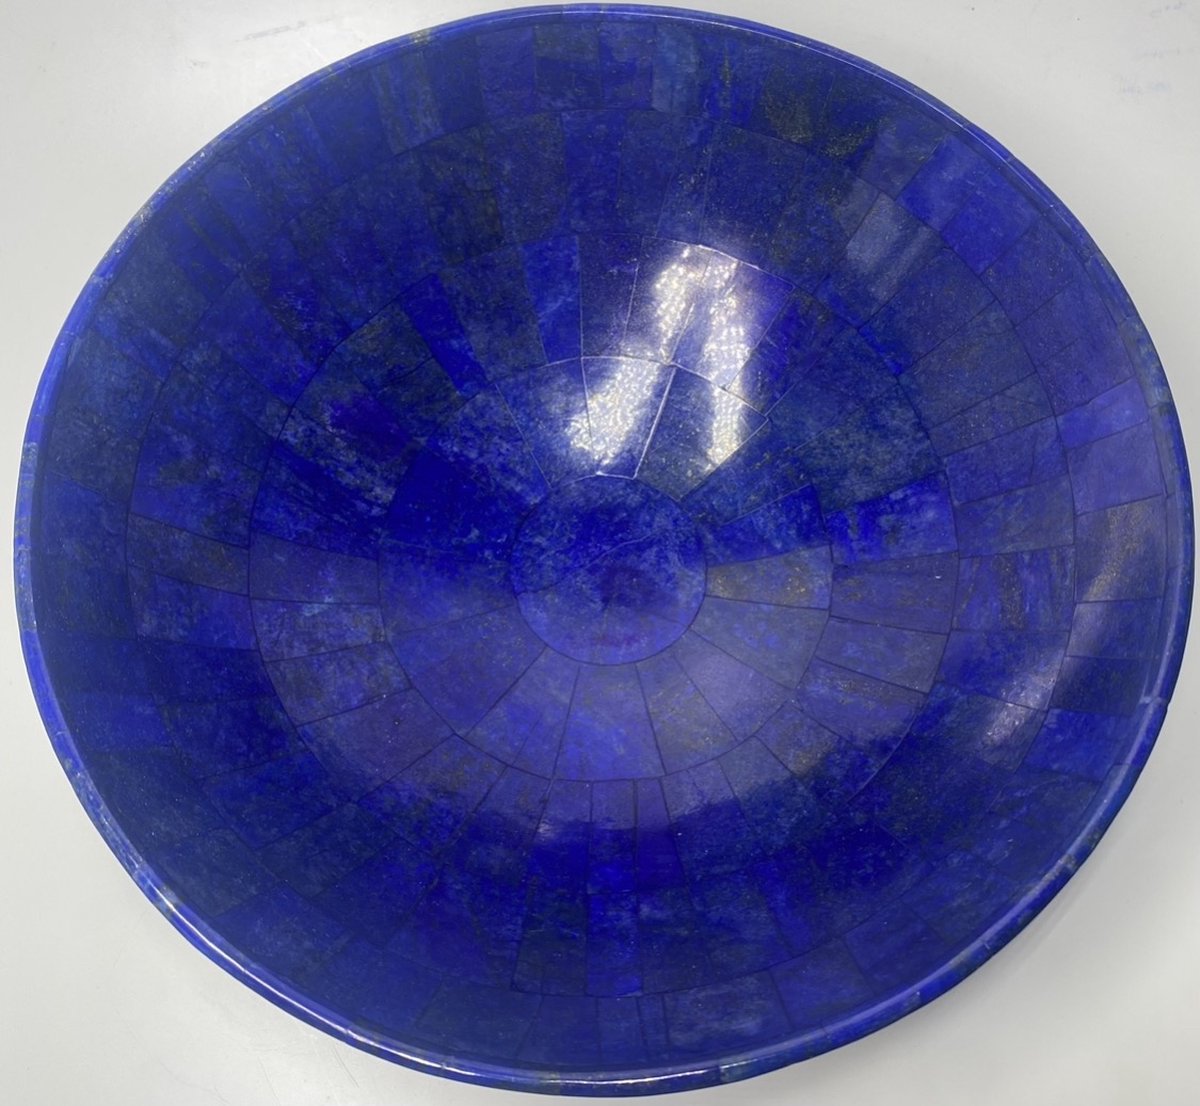 A+++ Natuurlijke Lapis Lazuli bowl/Kom 300 mm - 1,4 kg Handgemaakt - Blauw - Helend